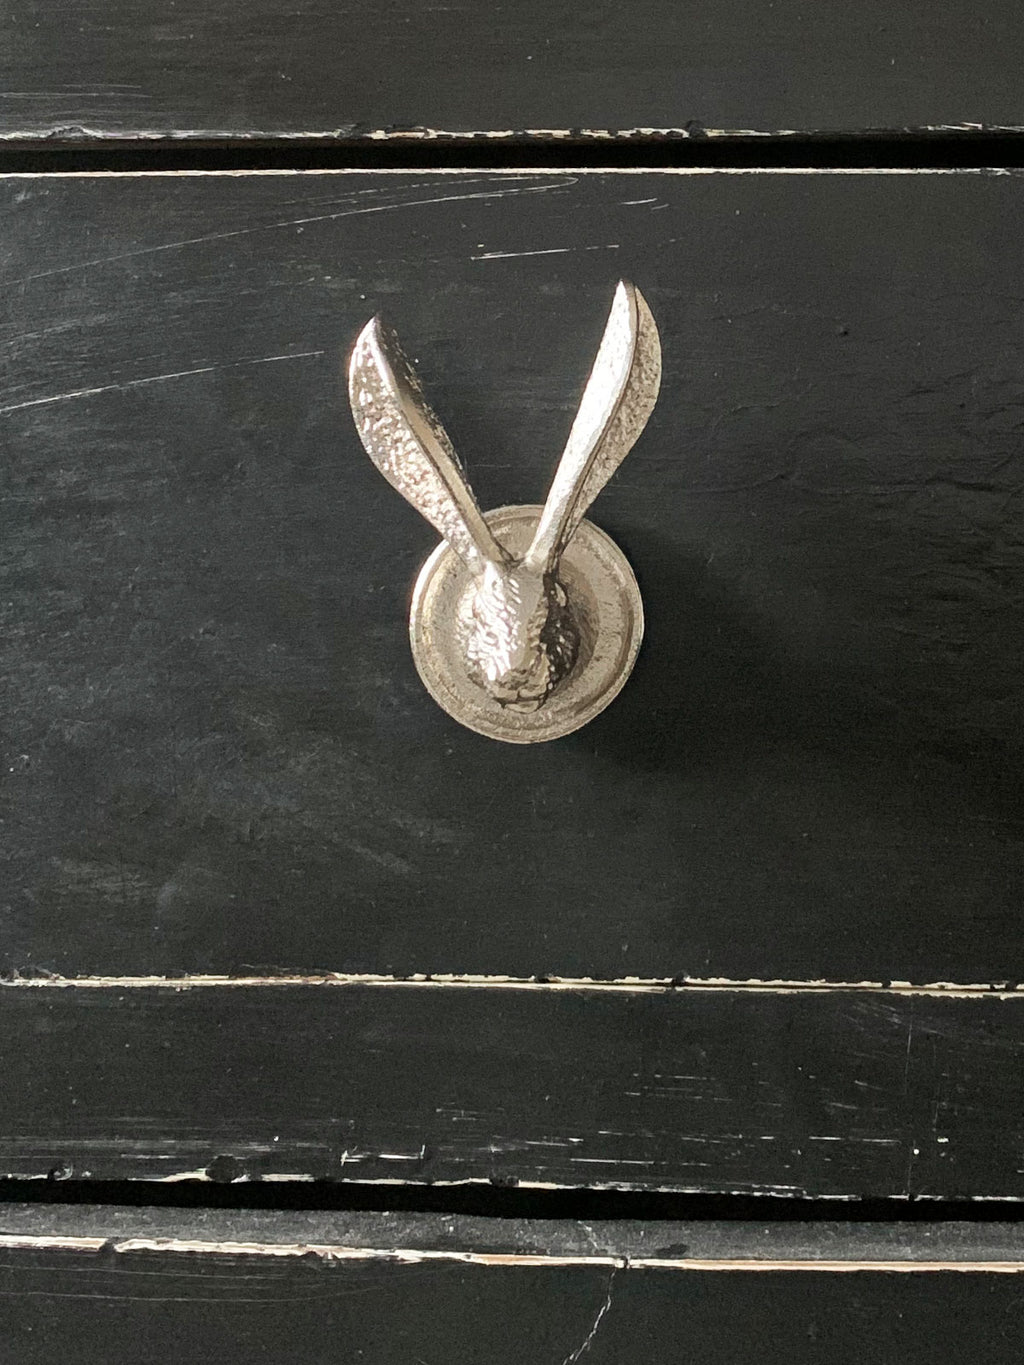 Metal Hare Drawer Knob - Silver